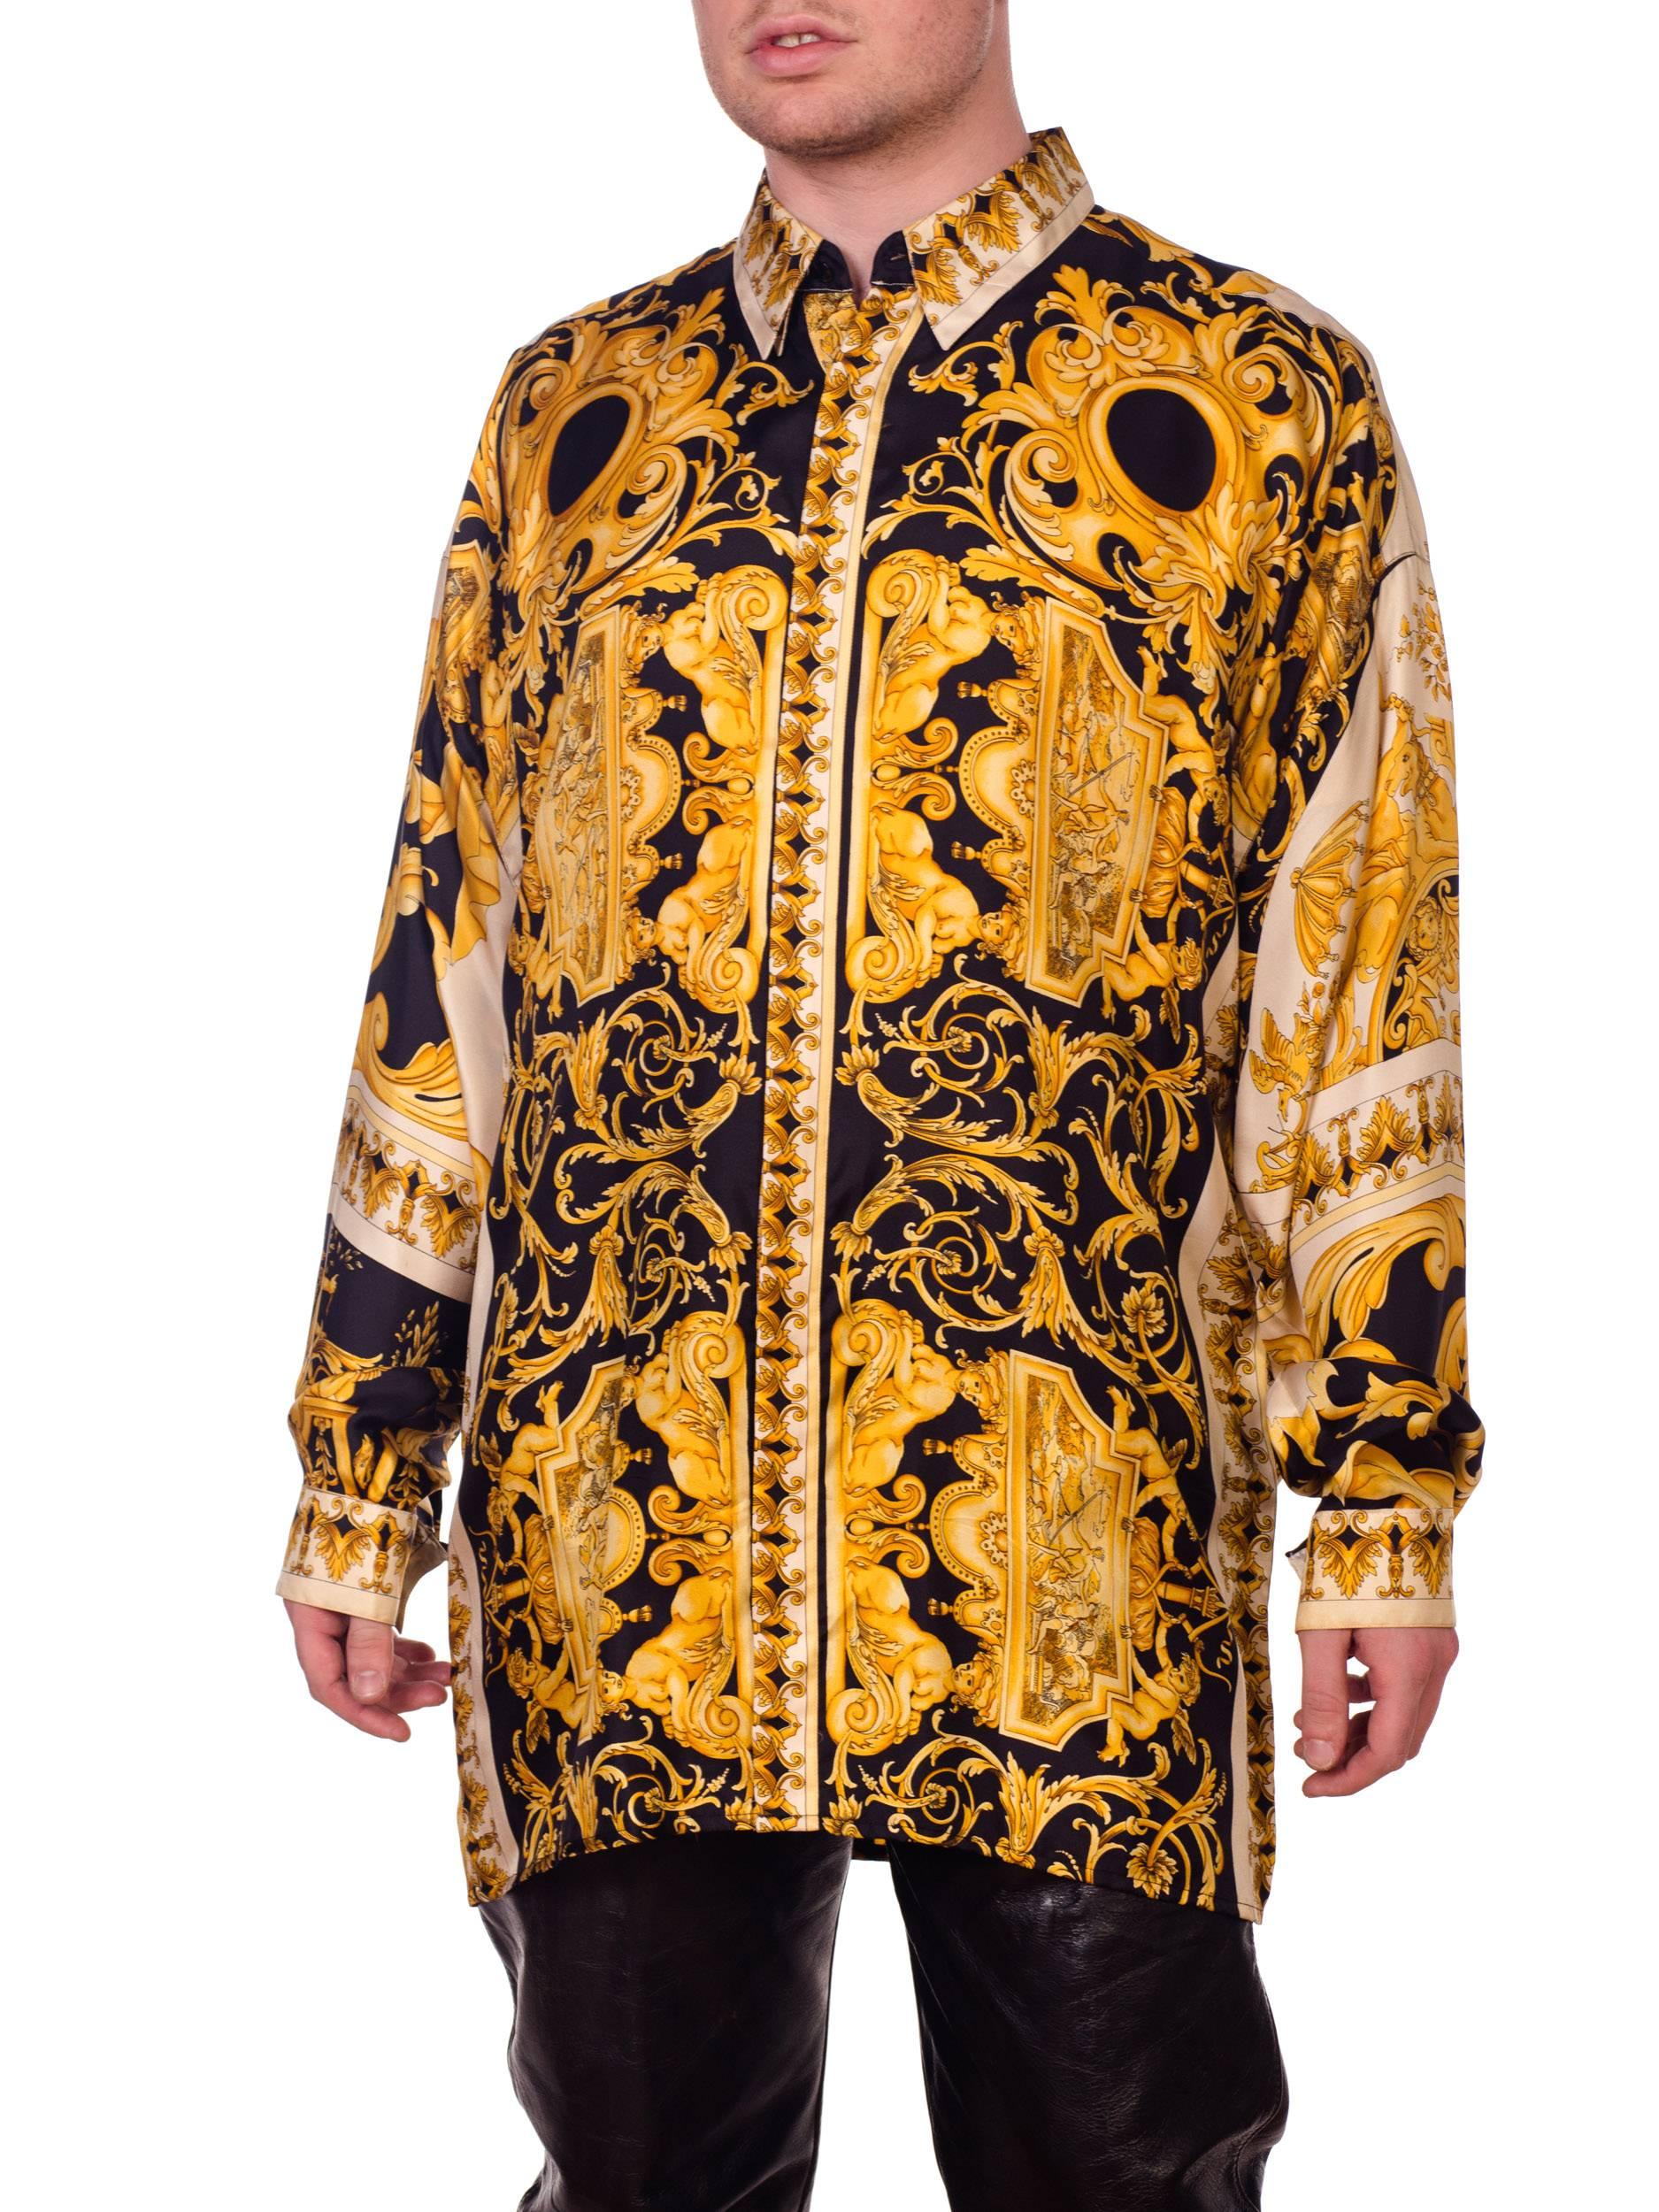 Women's or Men's Atelier Gianni Versace Silk Gold Filigree Shirt, 1990s 